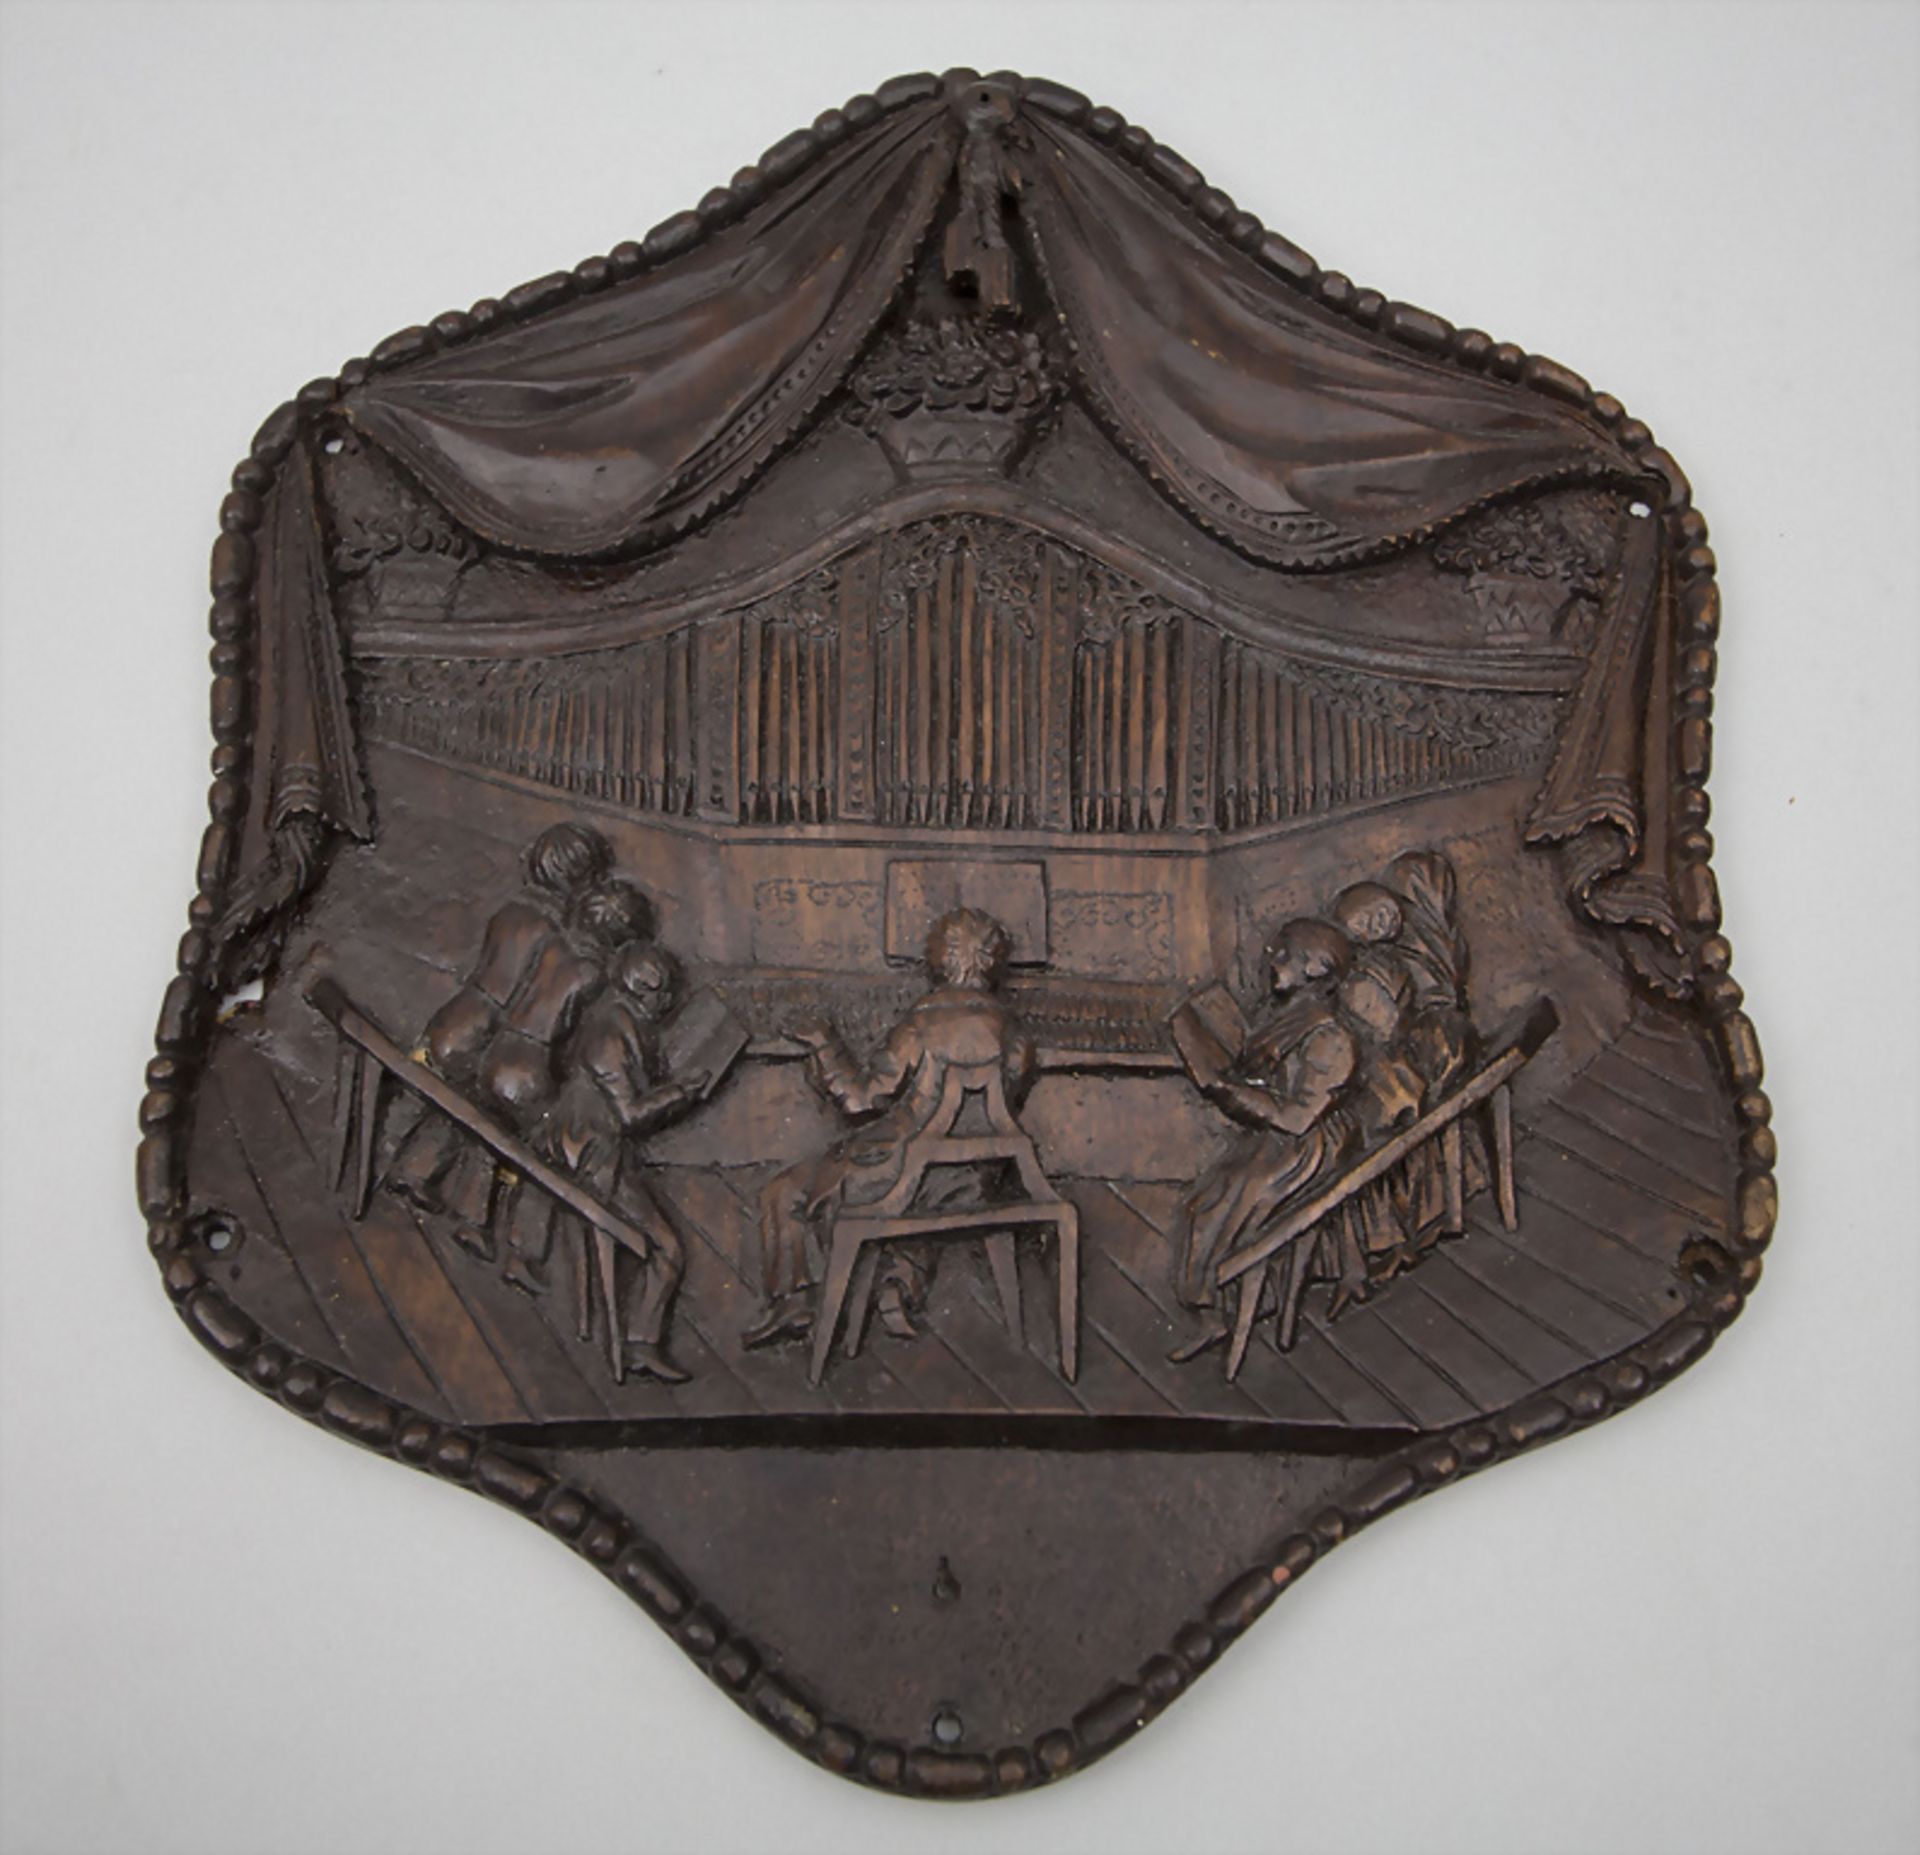 Holzflachrelief 'Orgelspieler mit Sängerschar' / A wooden relief 'An organ player with singers'